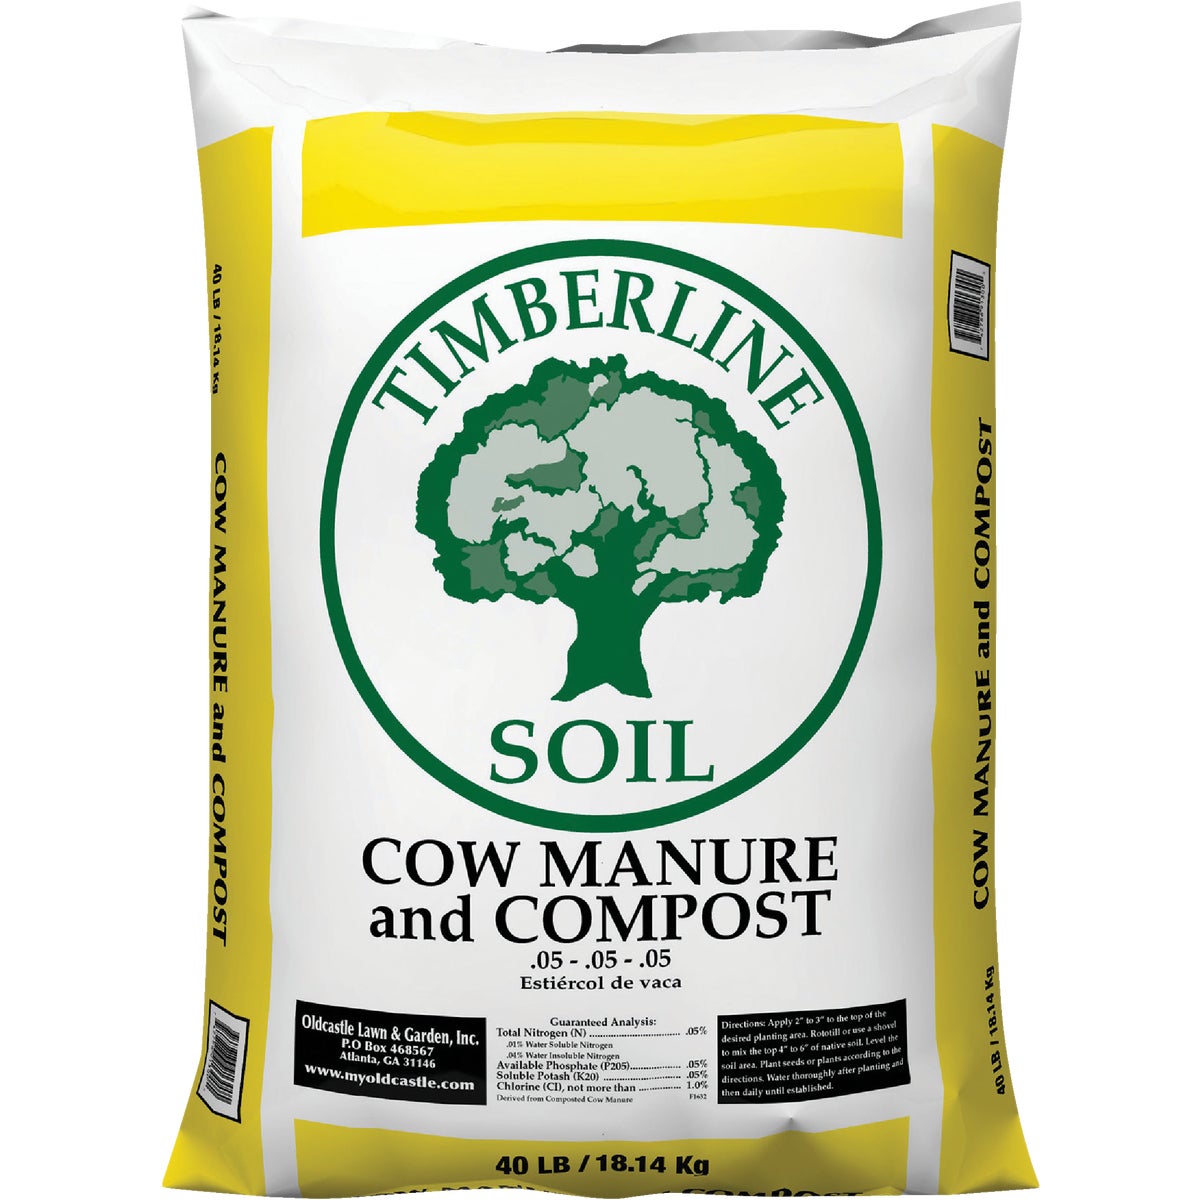 Item 700696, Natural, odorless soil conditioner.